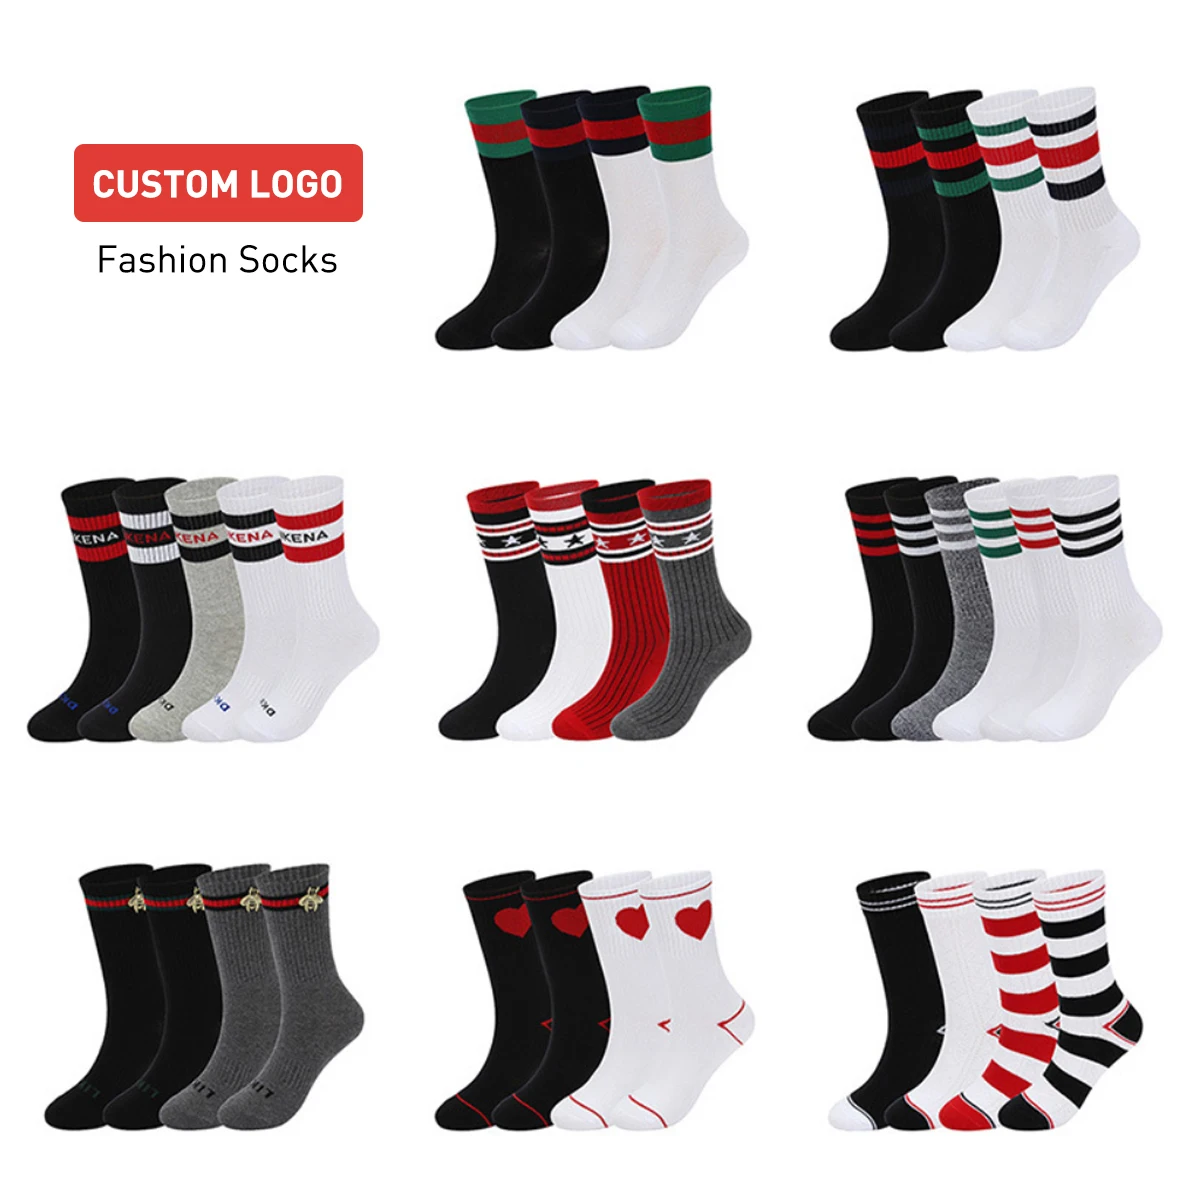 
Customs fashion socks men socks women street socks 